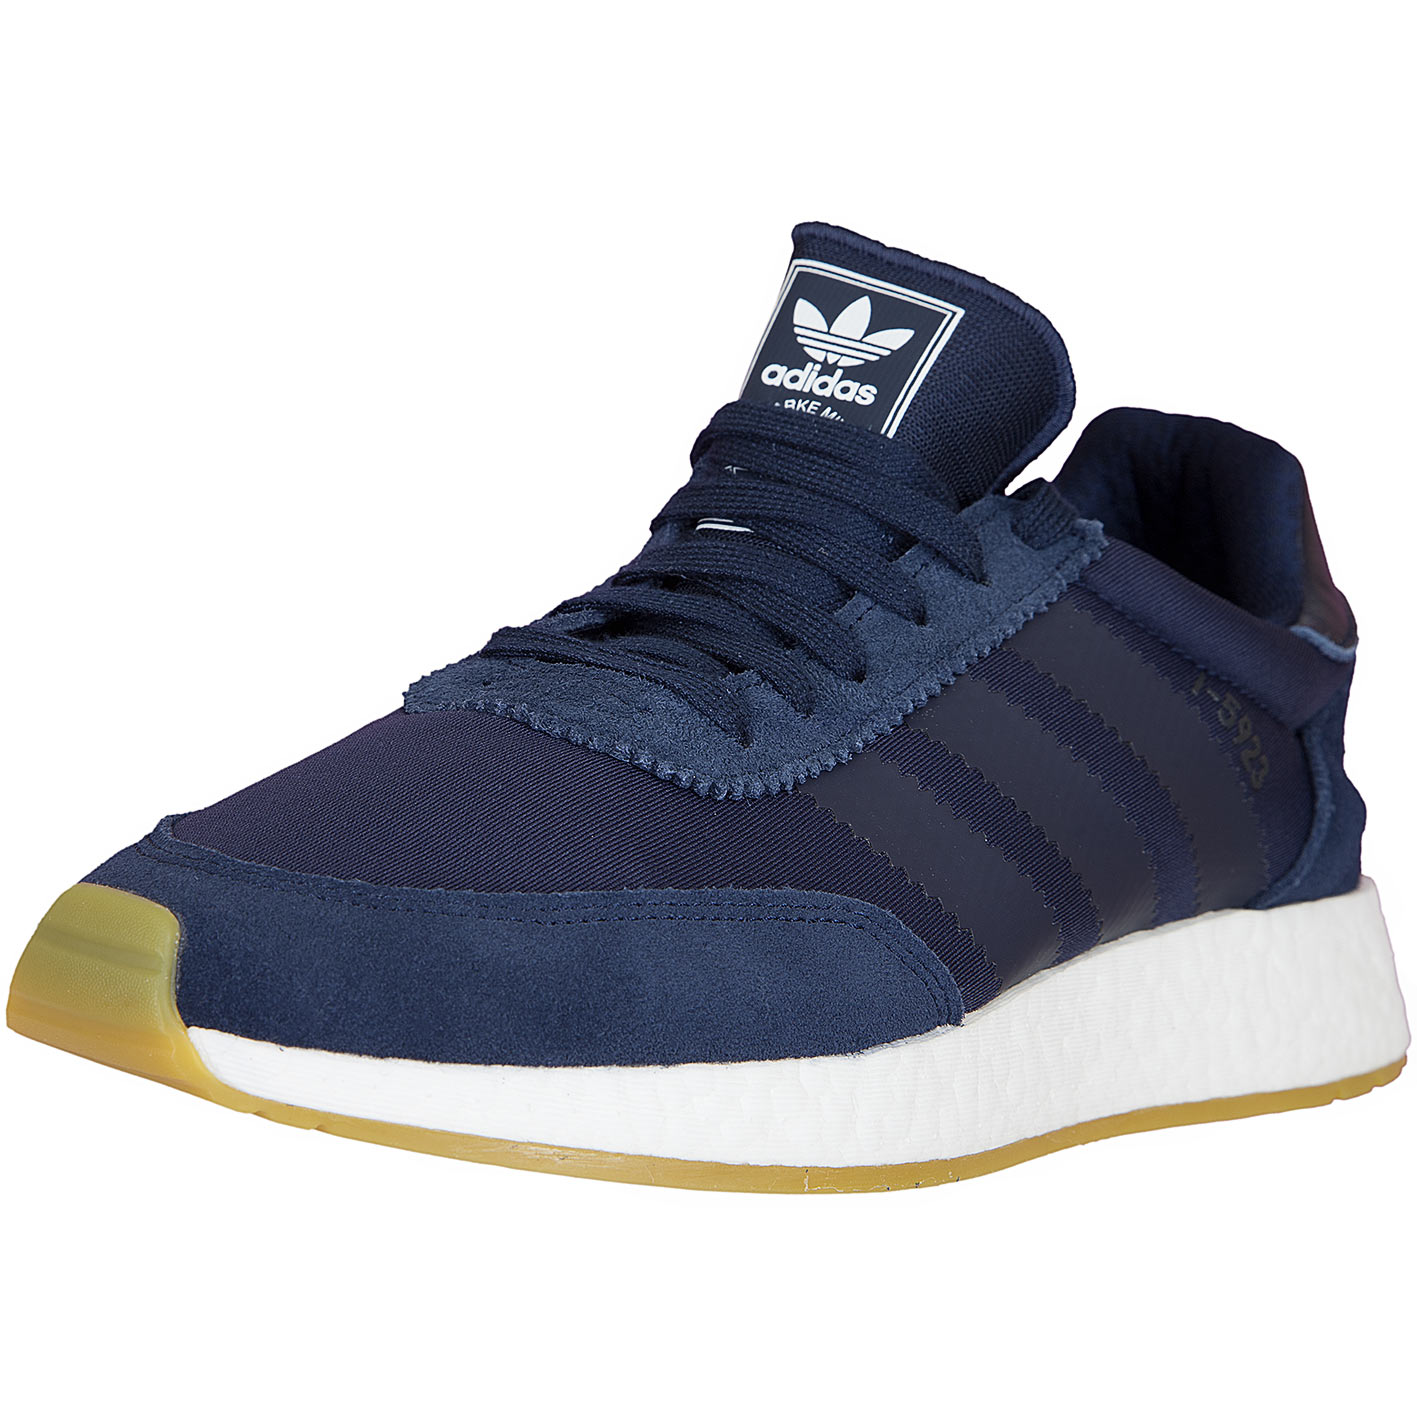 ☆ Adidas Originals Sneaker I-5923 dunkelblau - hier bestellen!